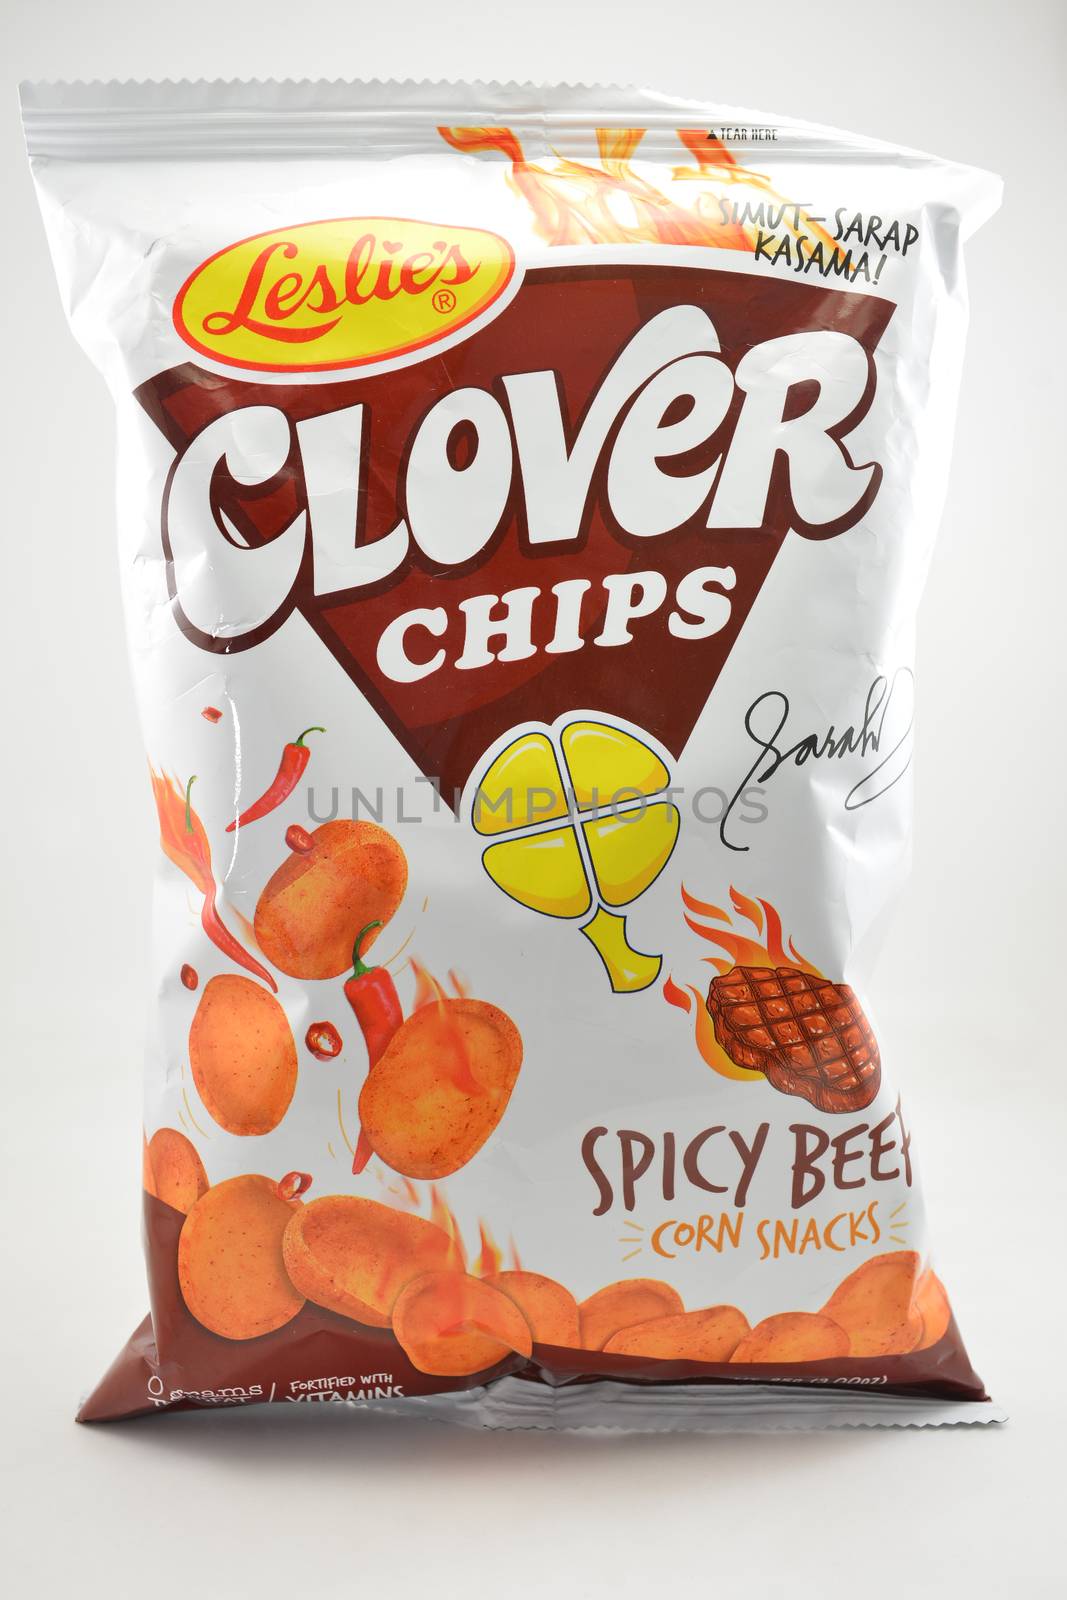 MANILA, PH - JUNE 26 - Clover chips spicy beef corn snacks on June 26, 2020 in Manila, Philippines.